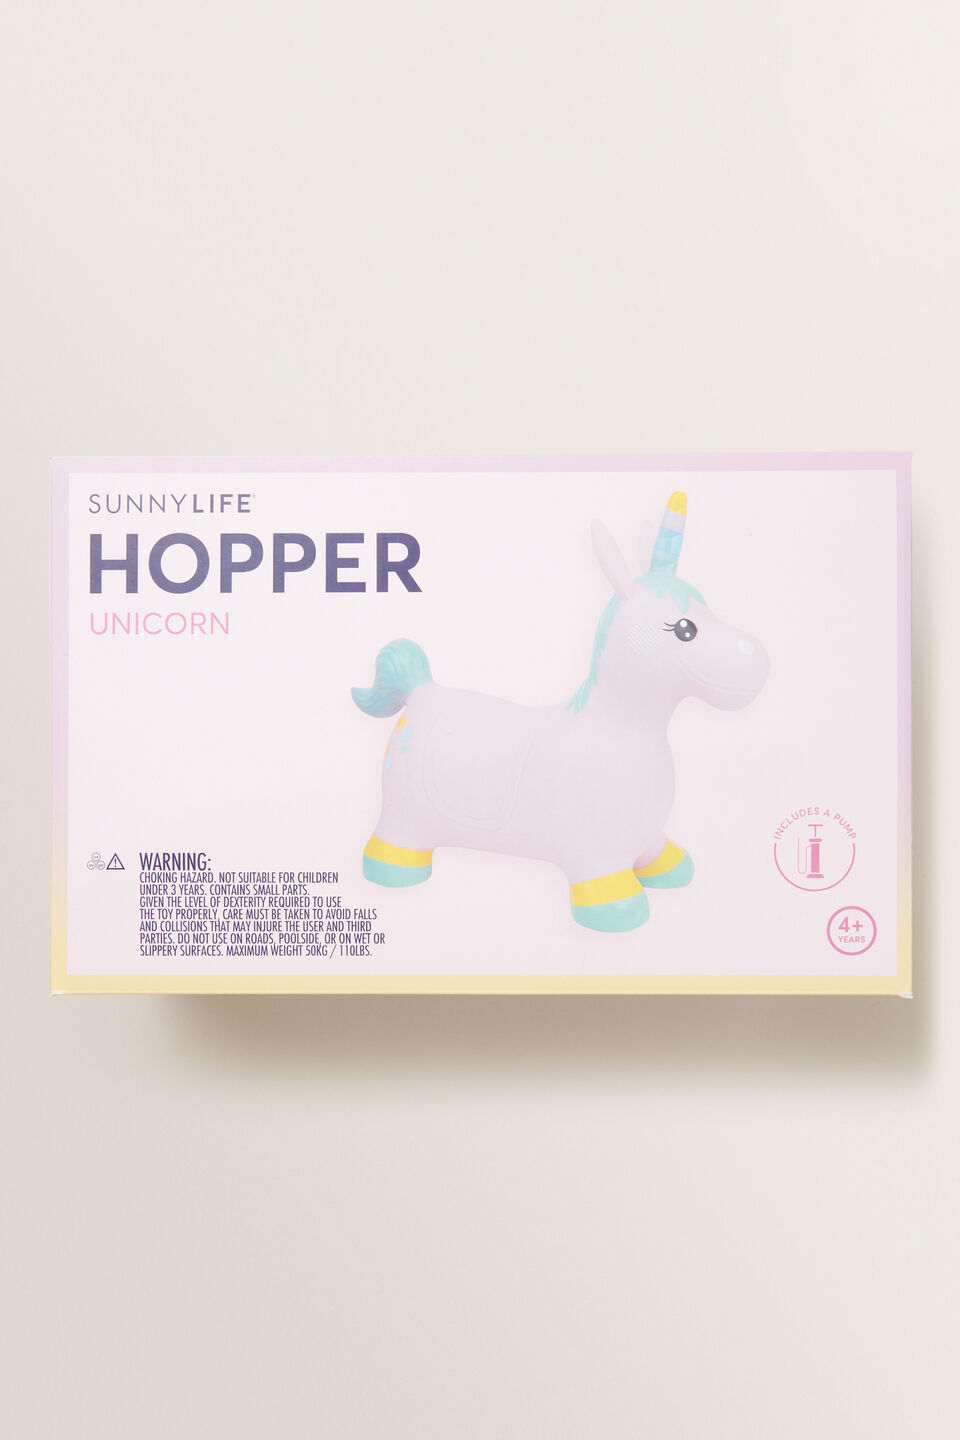 Unicorn Hopper  